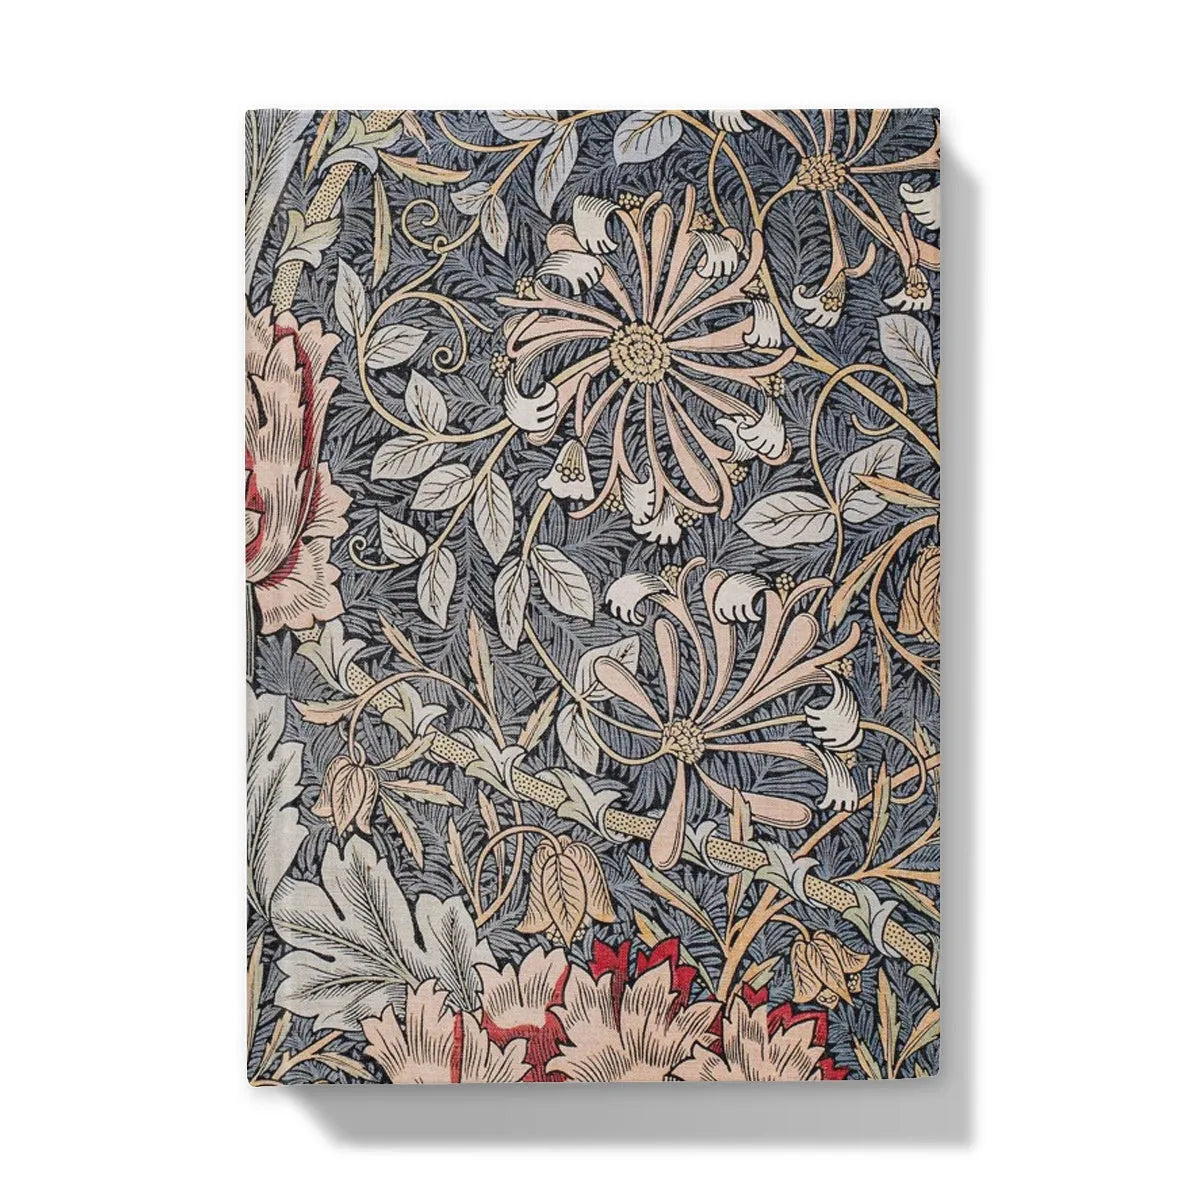 Honeysuckle By William Morris Hardback Journal - 5’x7’ / 5’ x 7’ - Lined Paper - Notebooks & Notepads - Aesthetic Art